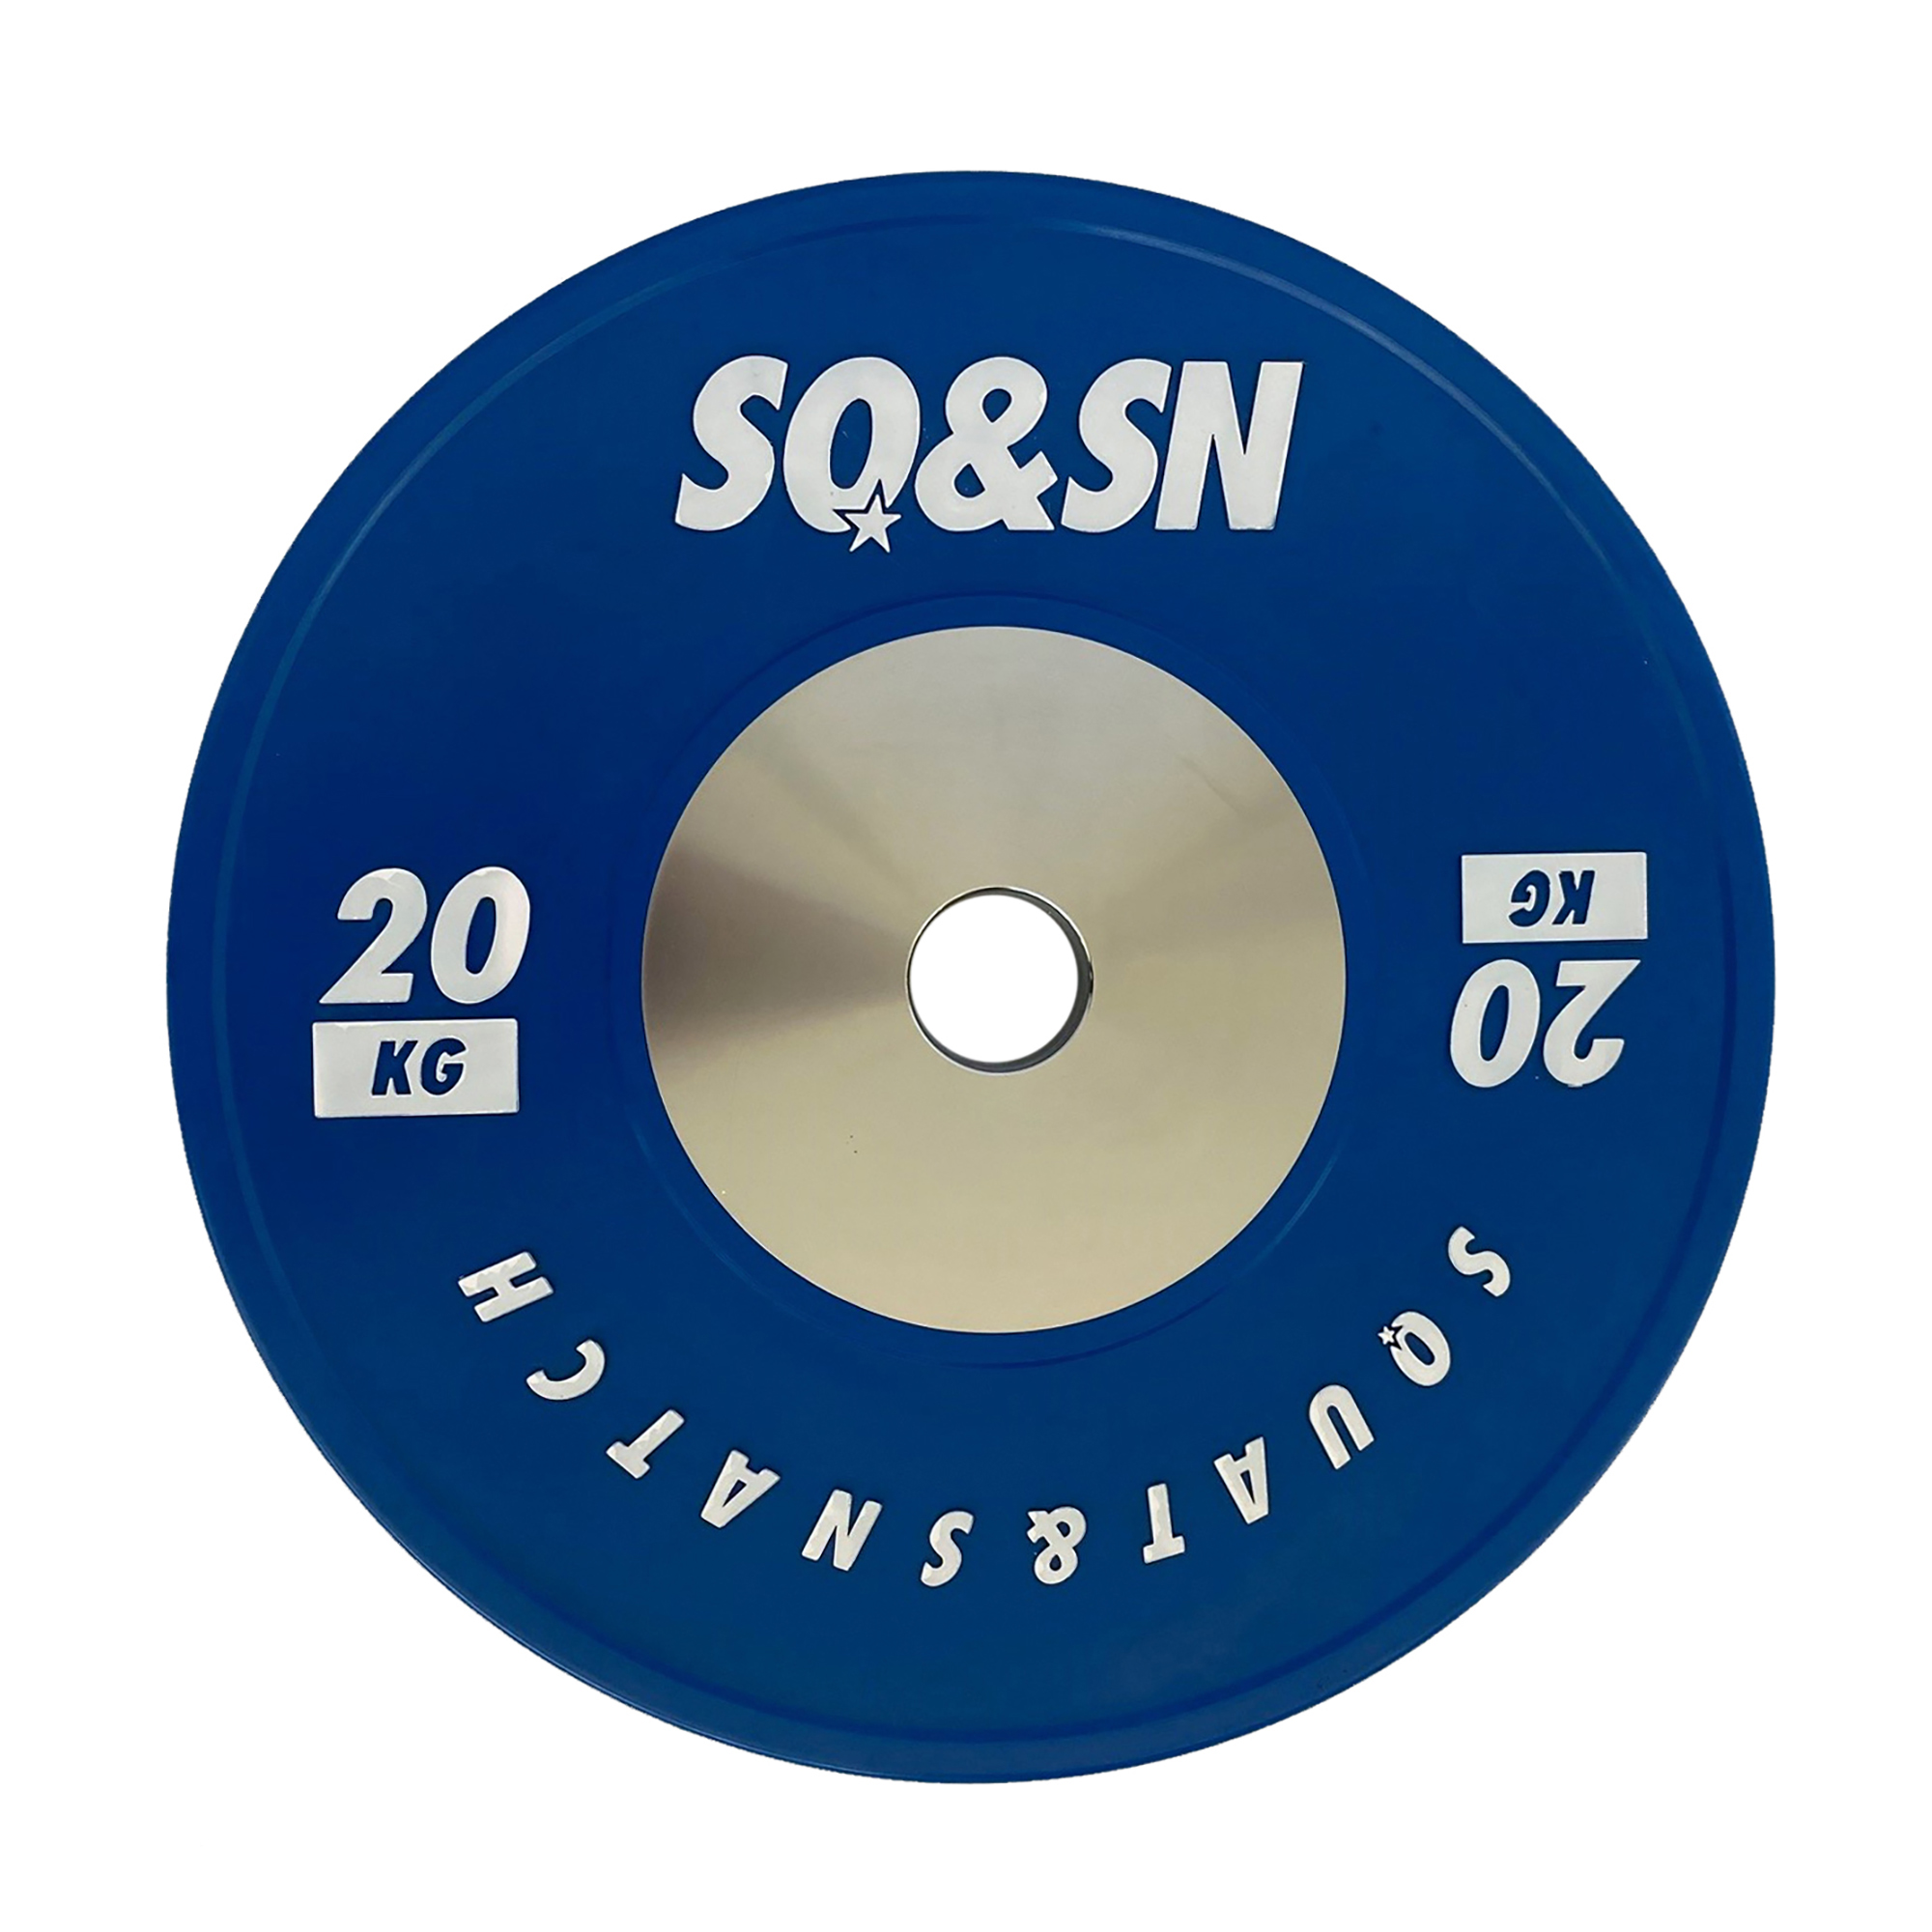 SQ&SN Competition Bumper Plate 20 kg Blue thumbnail